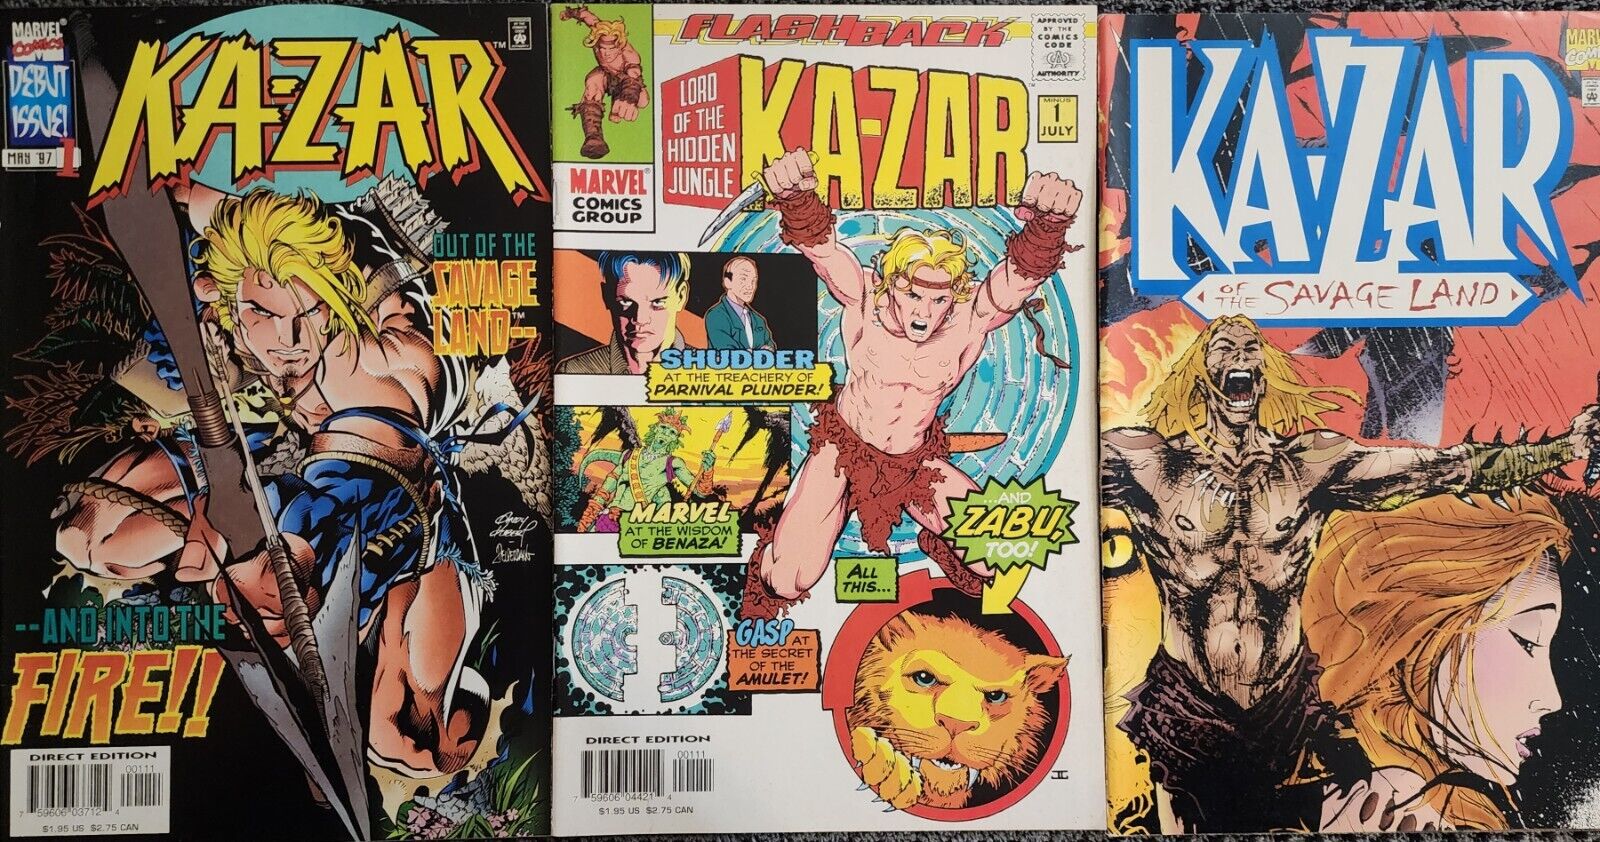 Ka-zar The Savage #1, 1 Marvel Comic Book Lot/Set Vol. 1, Vol. 2 KEY 1997 